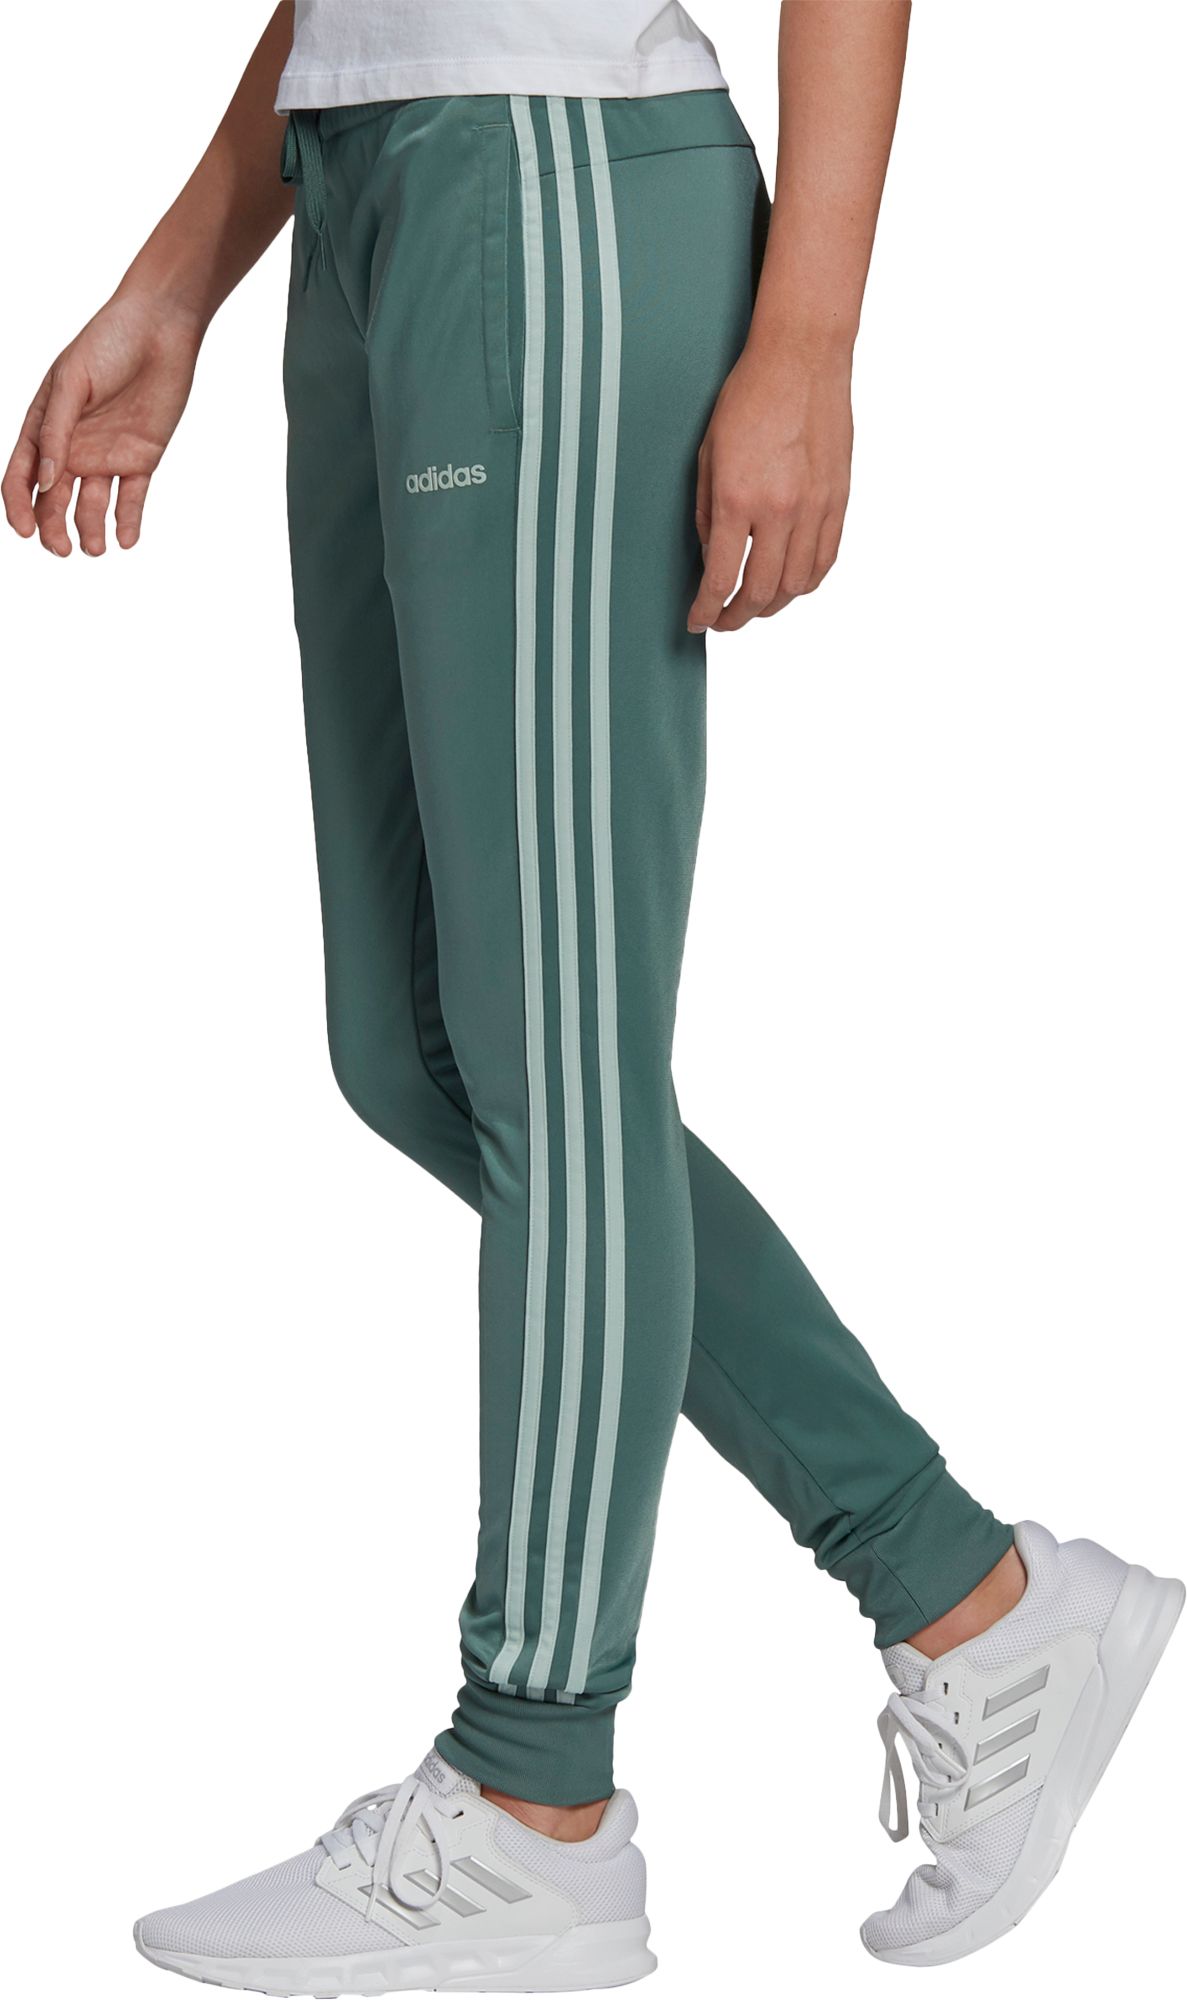 women's adidas tricot jogger pants